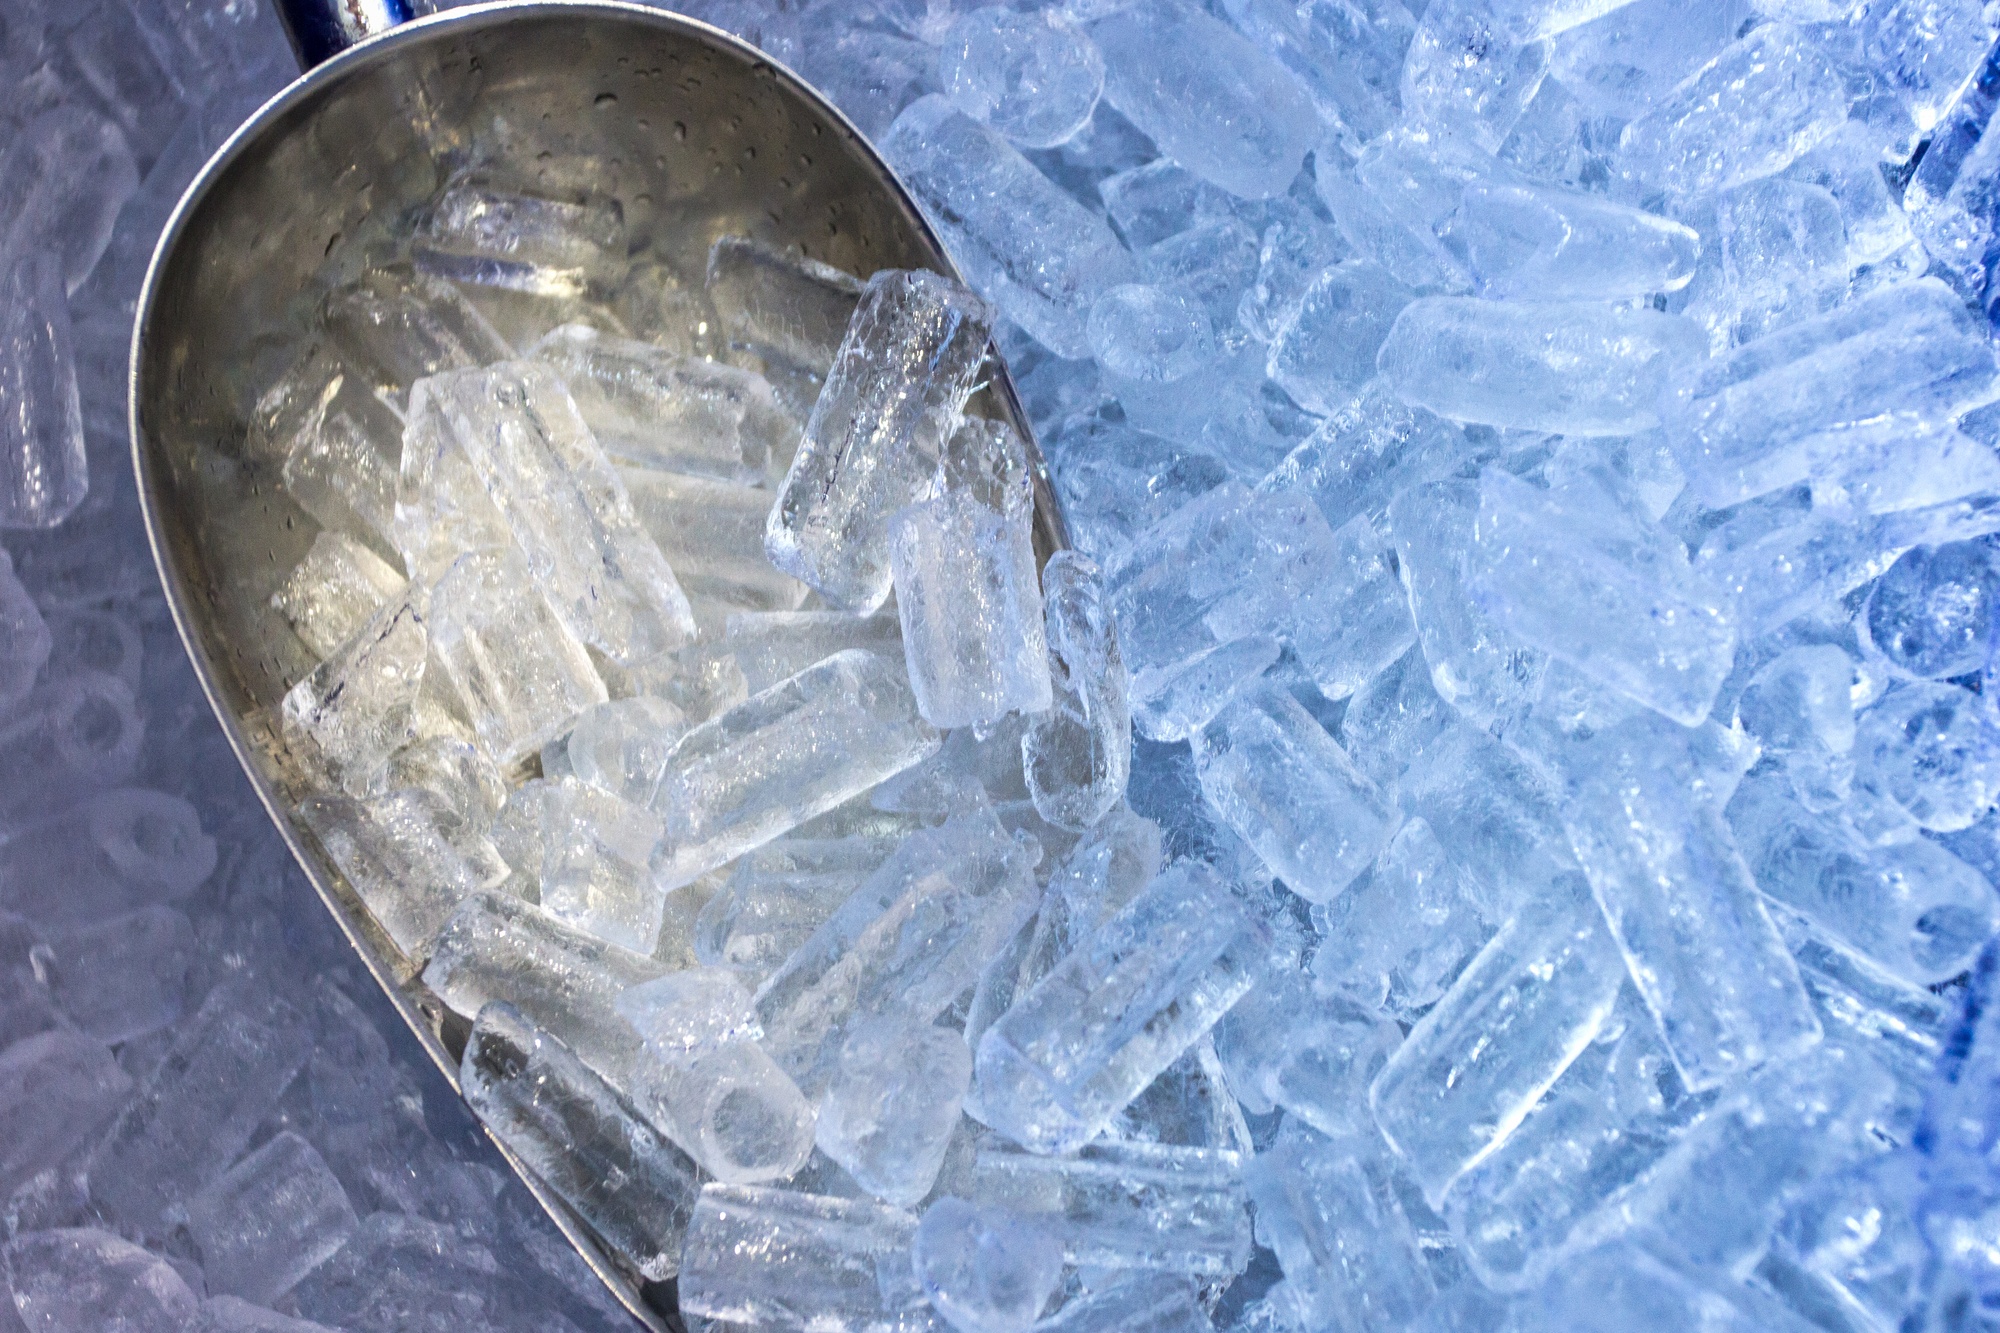 The aluminum scoop and ice